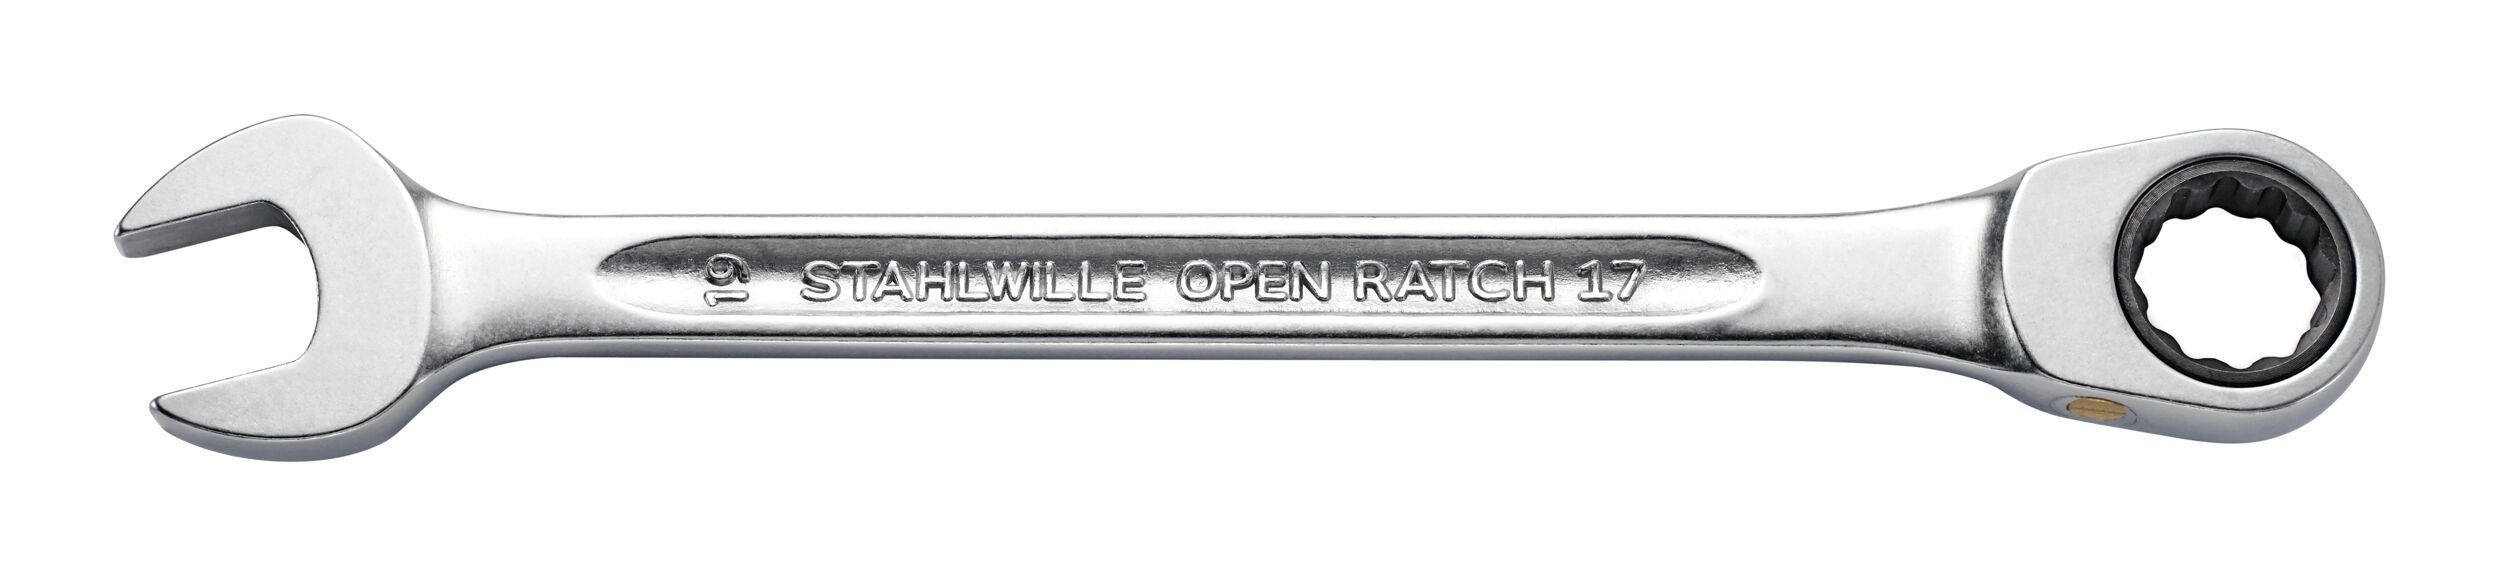 Stahlwille Ratschenringschlüssel, Maul-Ringratschen-Schlüssel gerade 11 mm